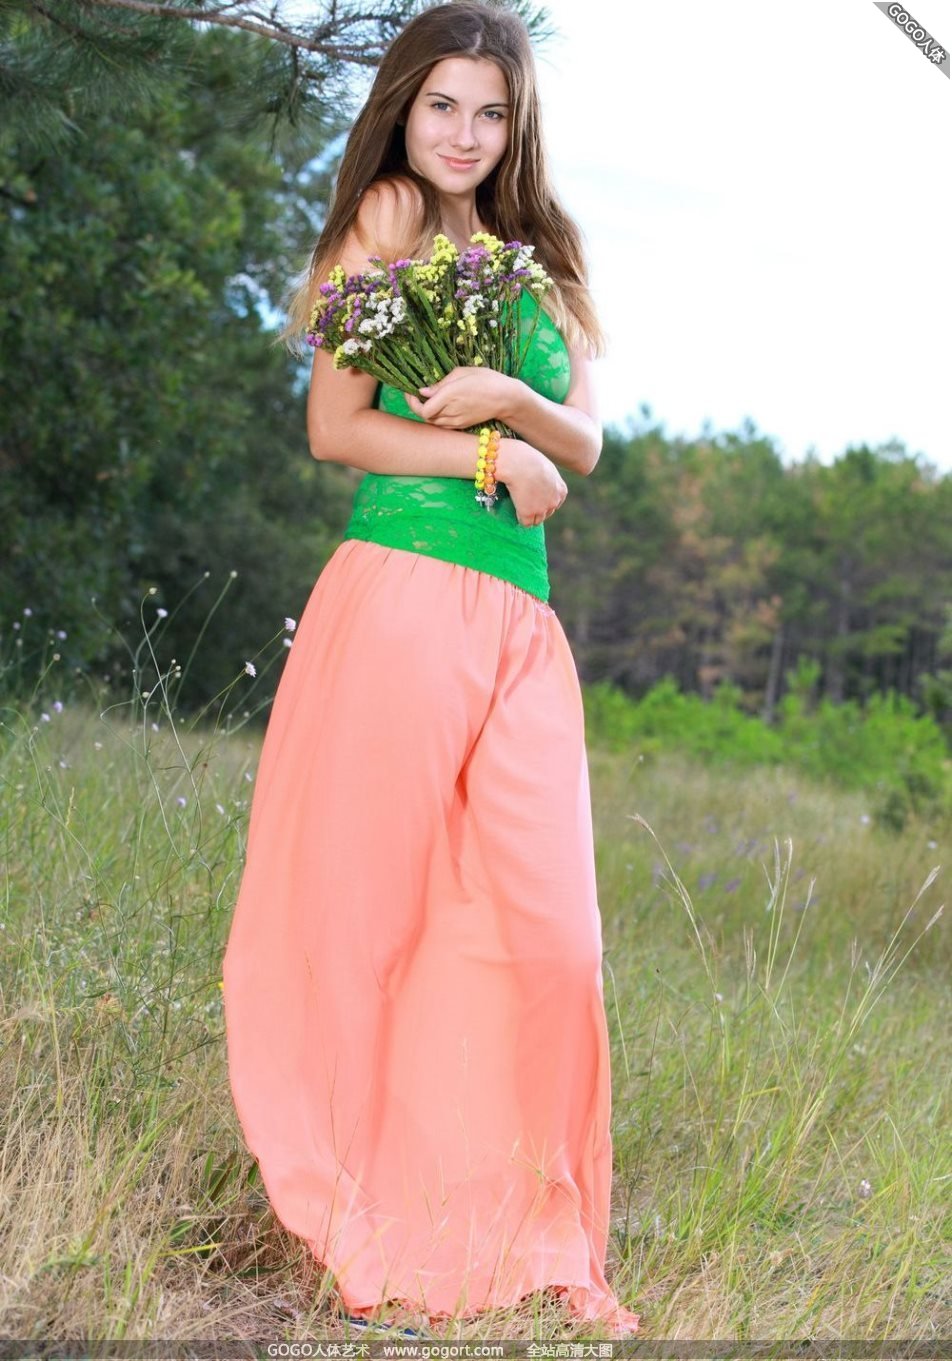 Ukrainian supermodel Marta outdoor body 